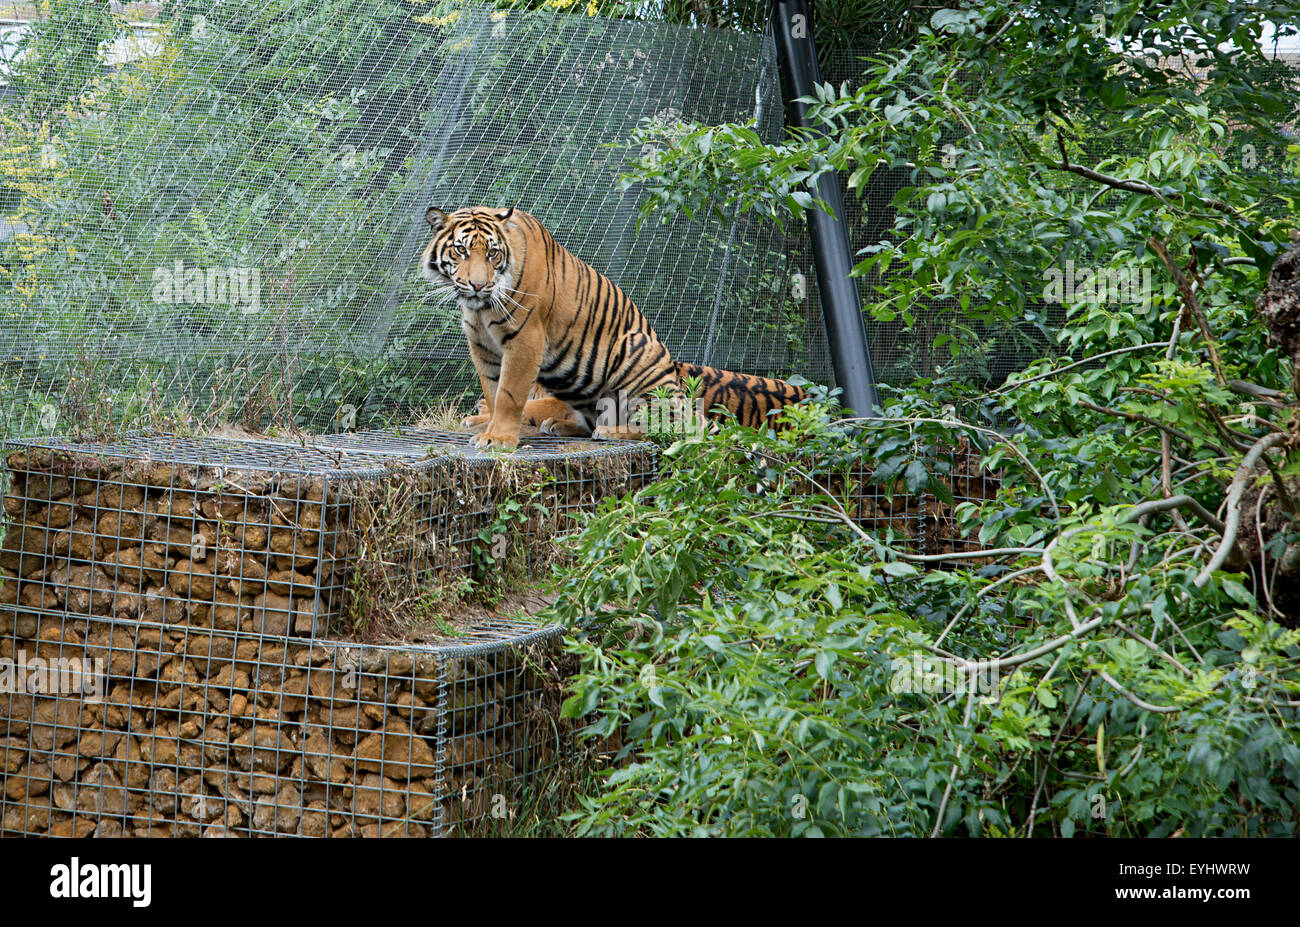 Sumatran tiger keeps watch from high wall in the Tiger Territory enclosure at London Zoo Stock Photo